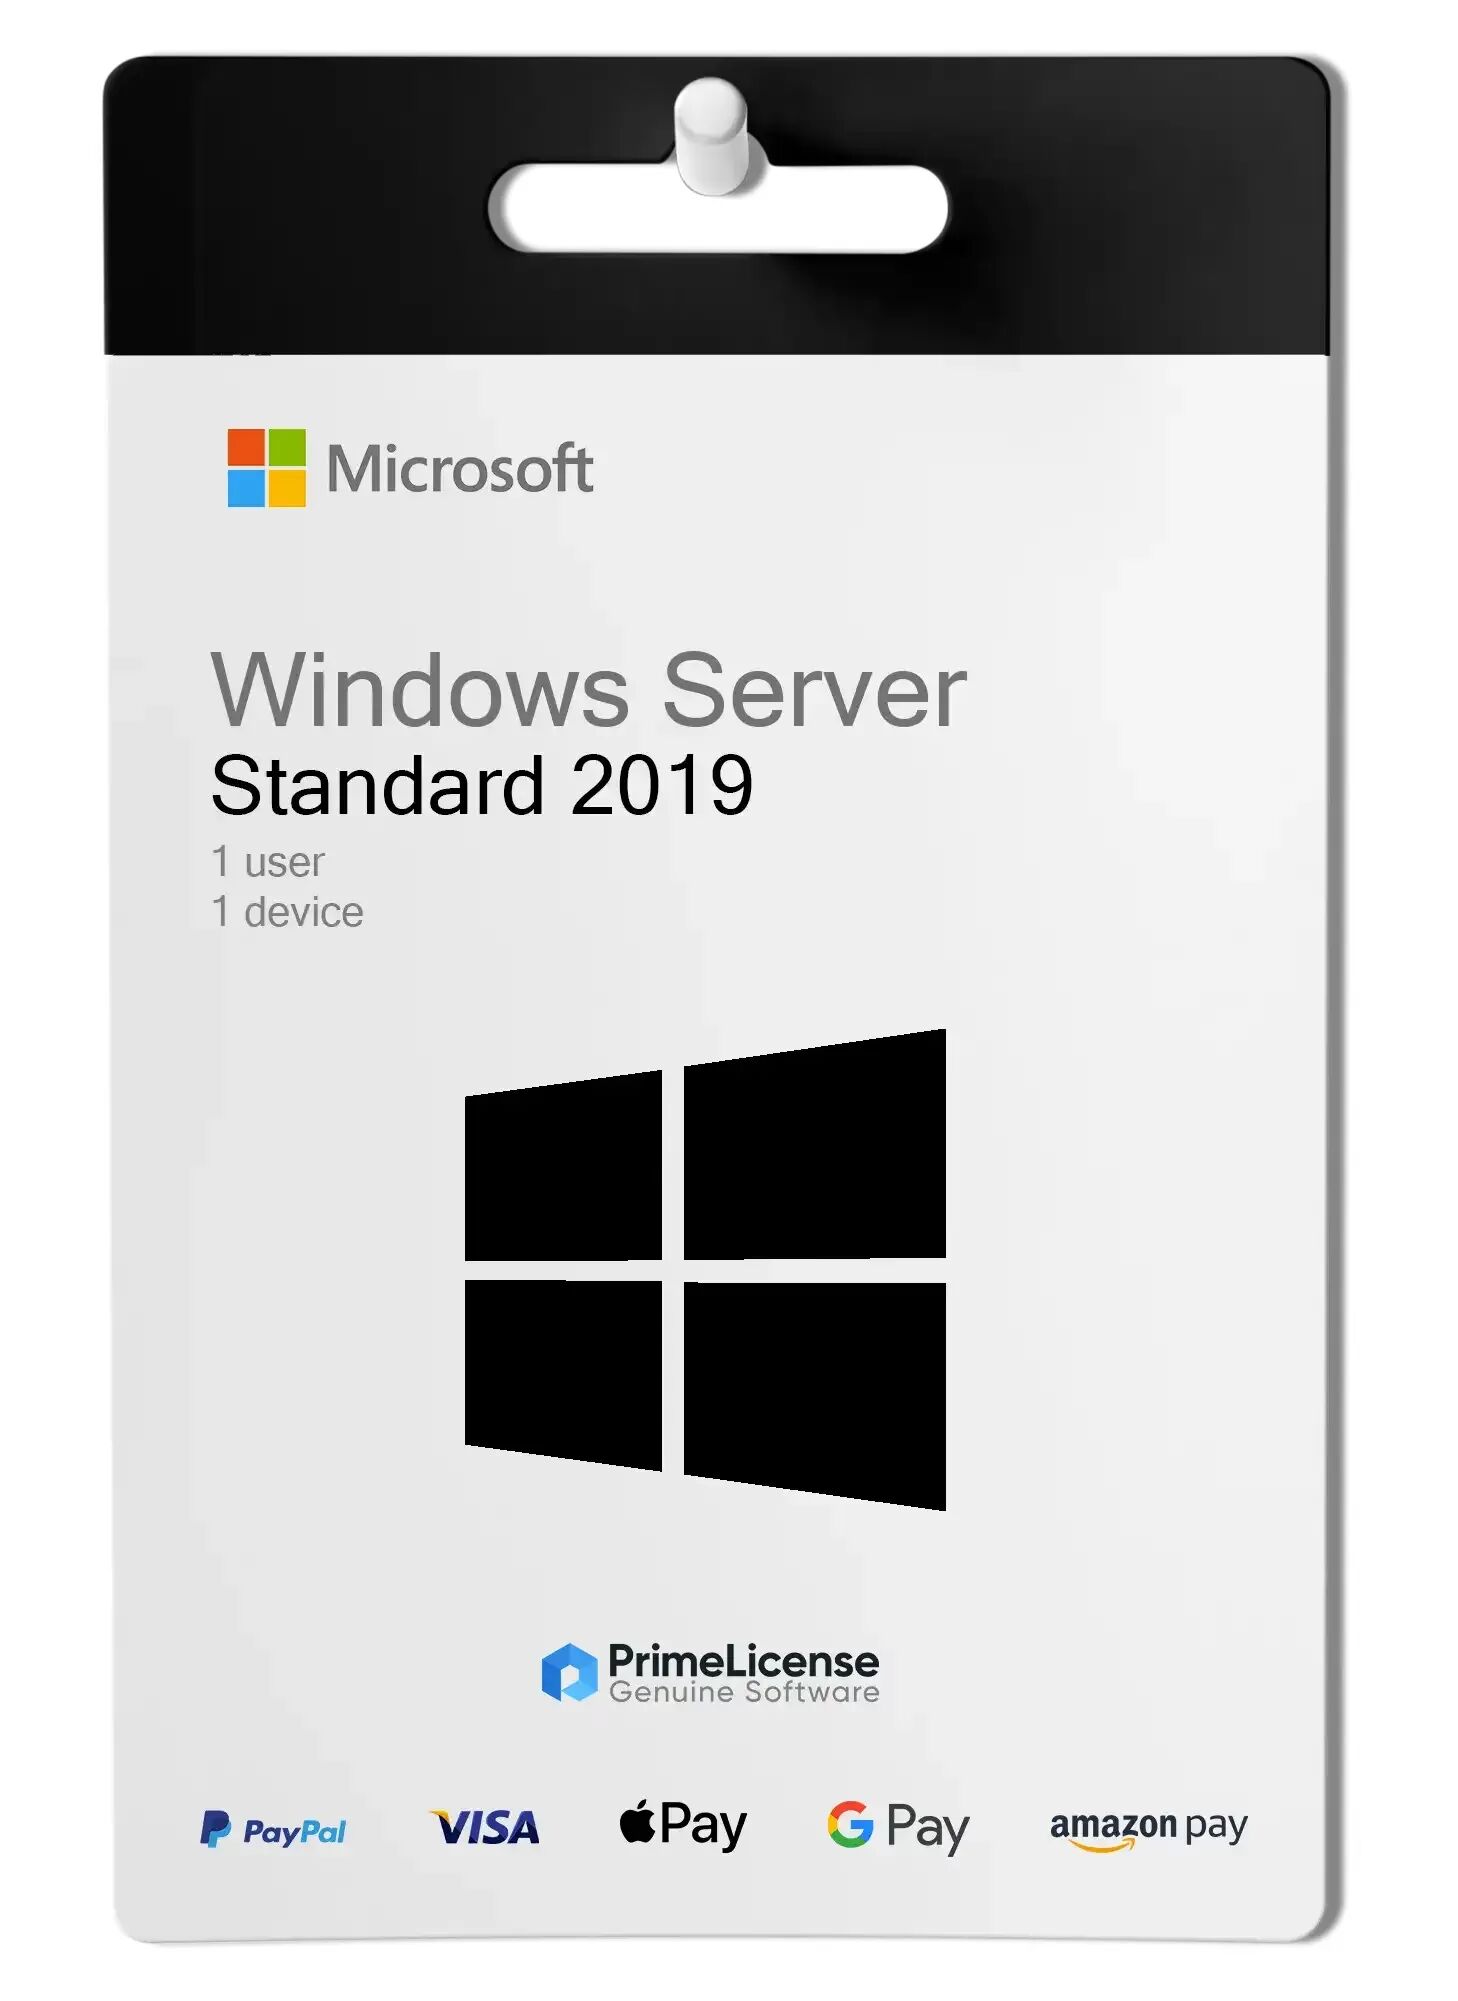 Microsoft Windows Server 2019 Standard (16-Core)